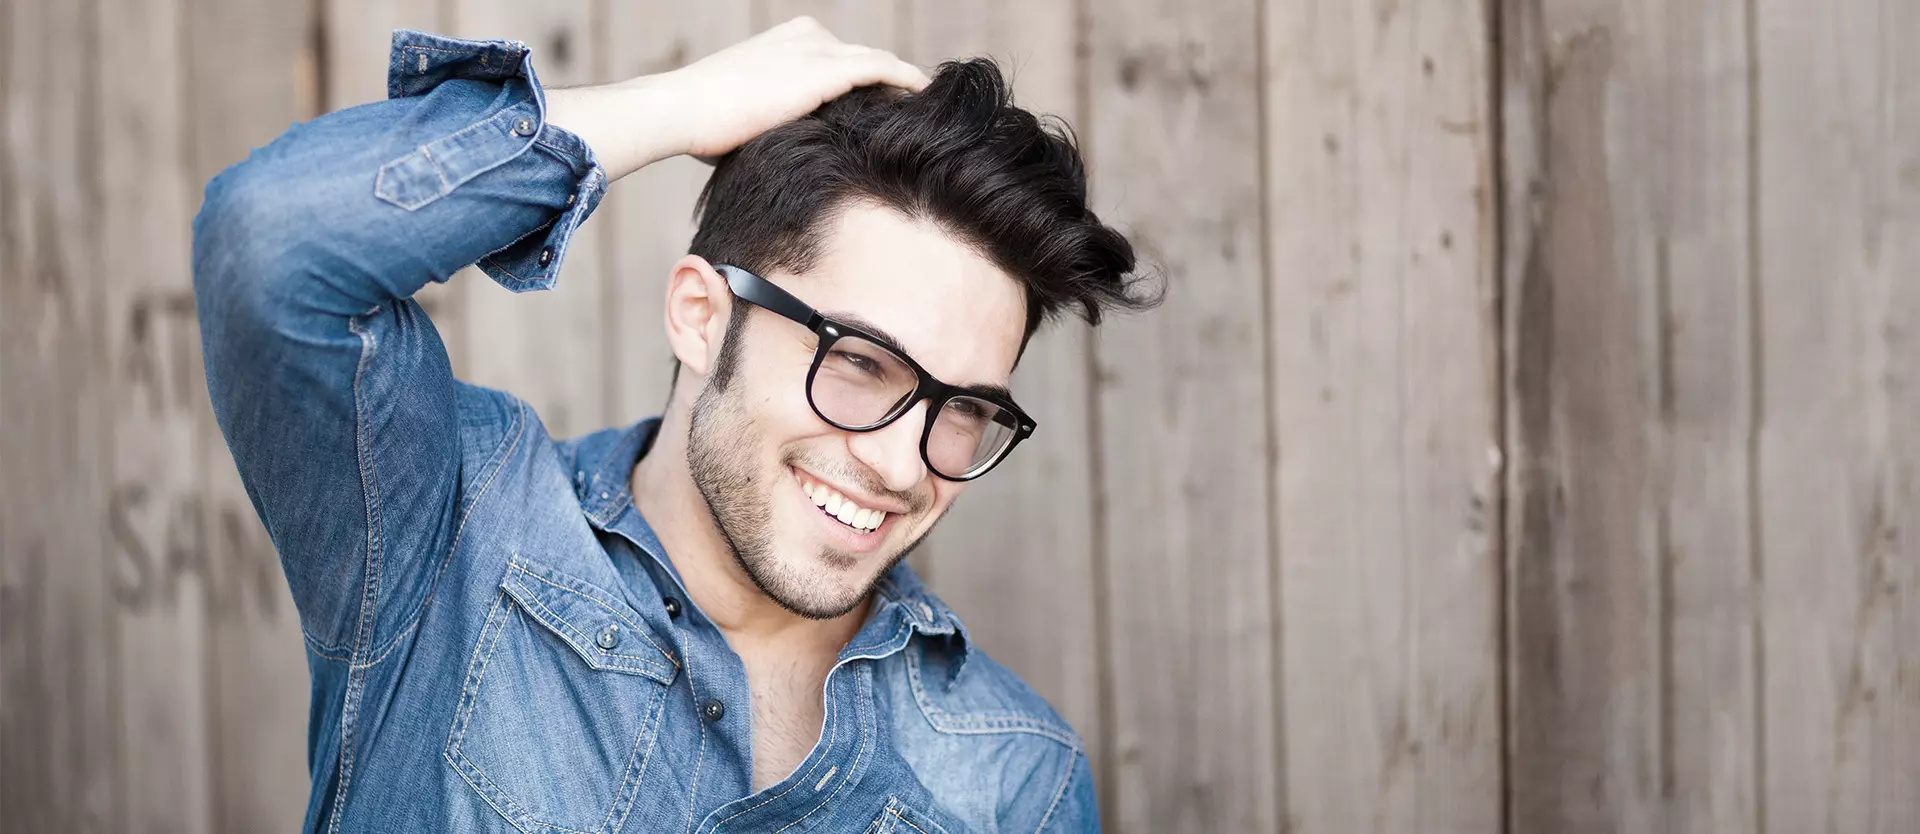 Hair Restoration Systems for Men